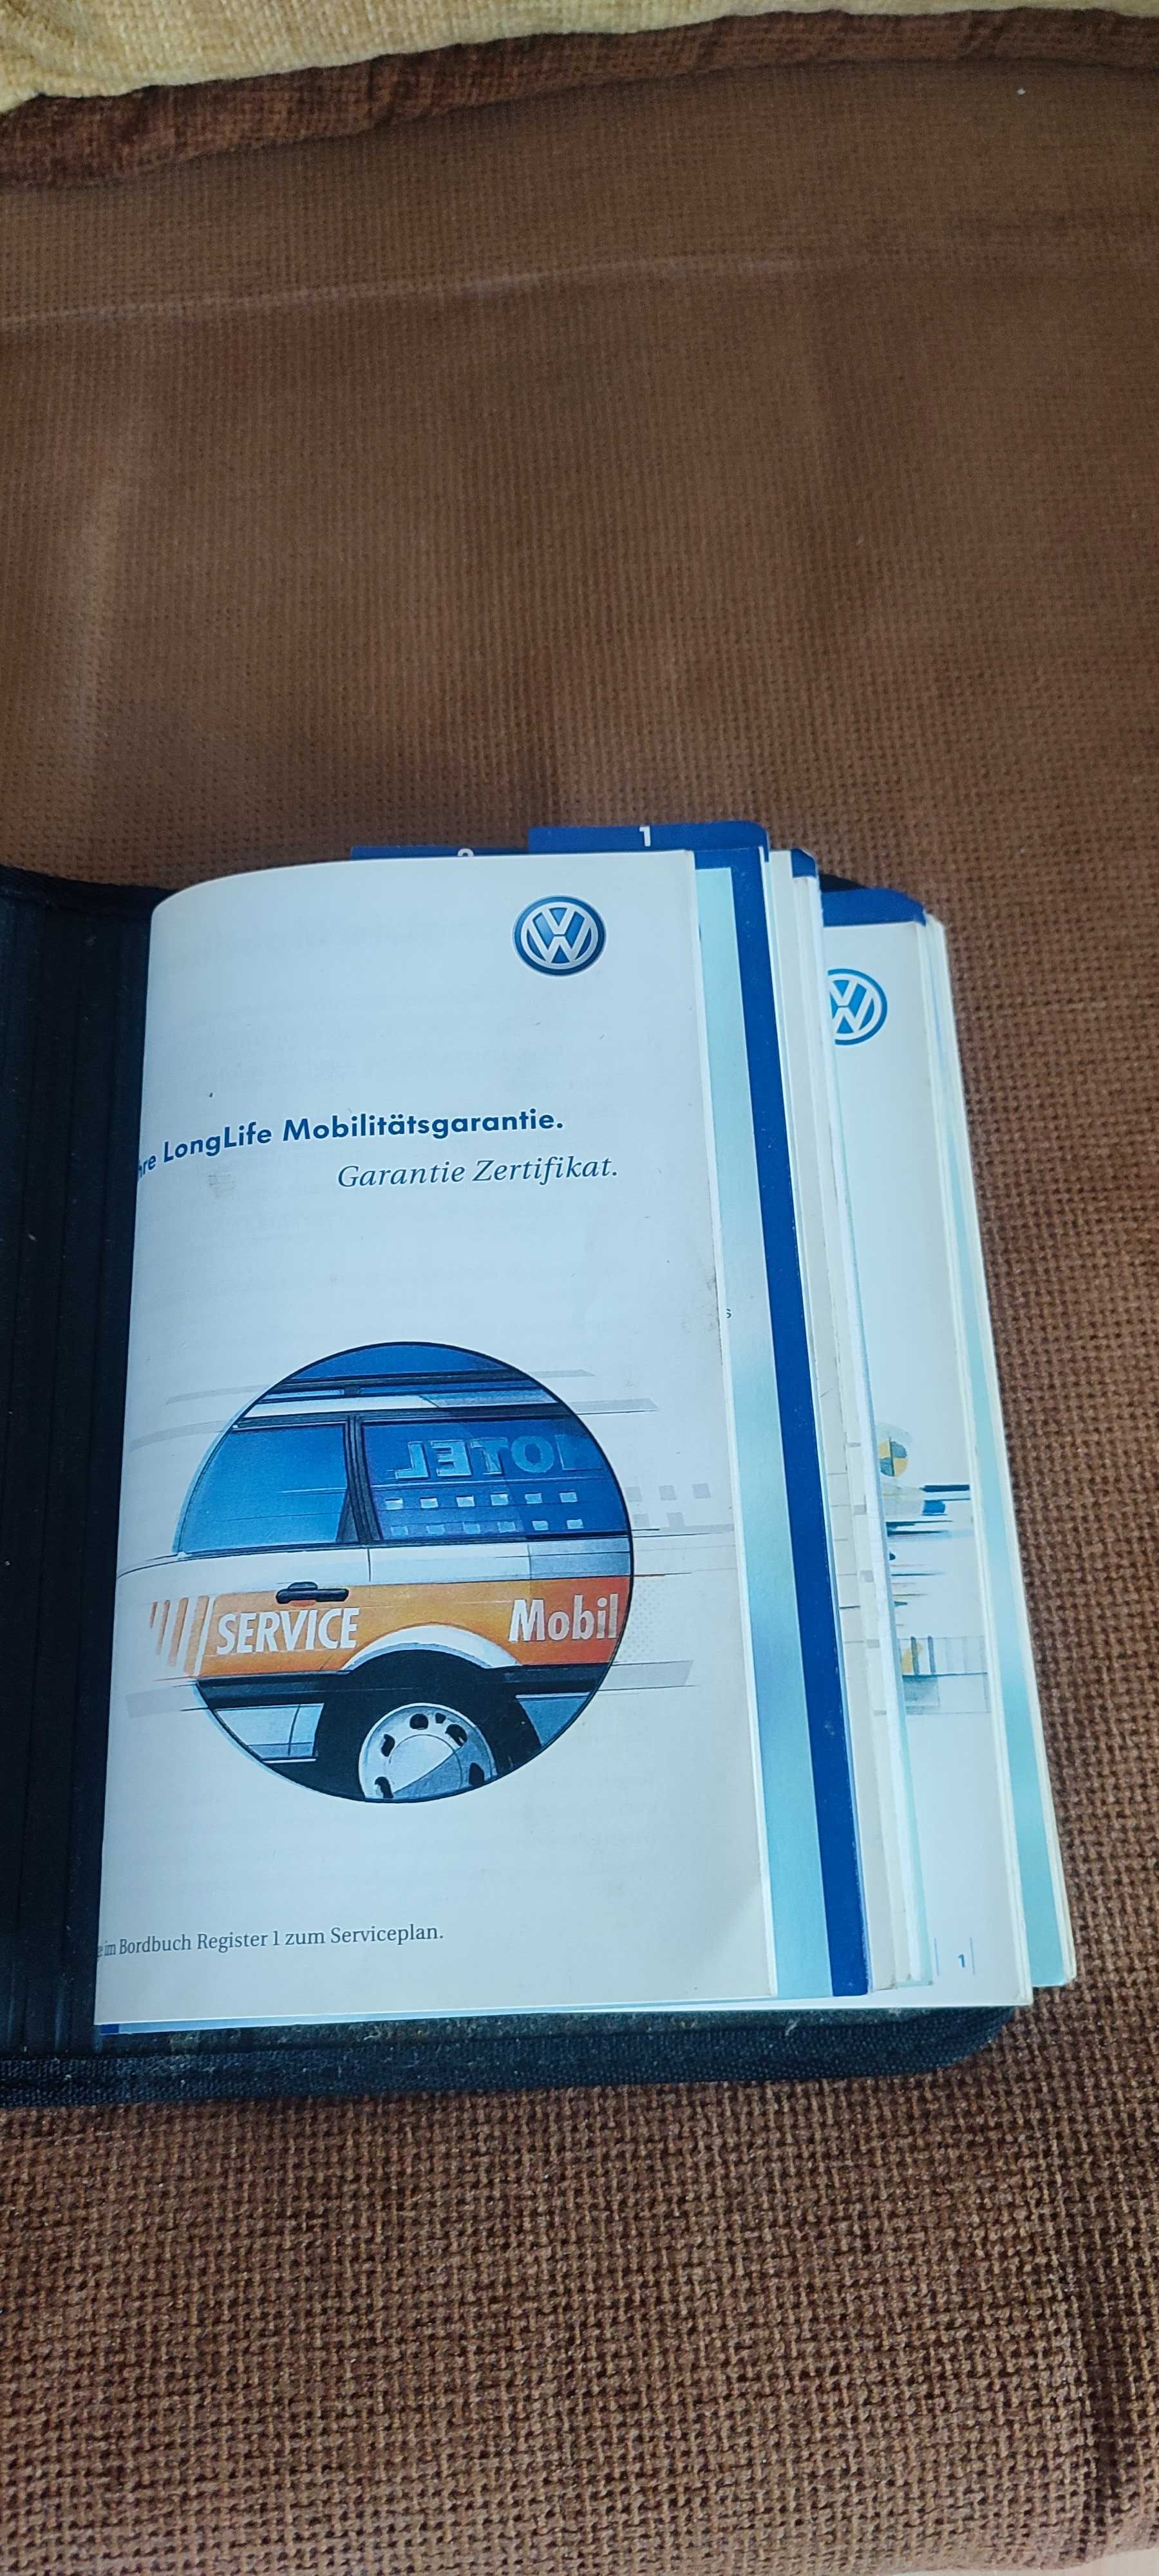 Instrukcja obsługi Volkswagen Golf 4